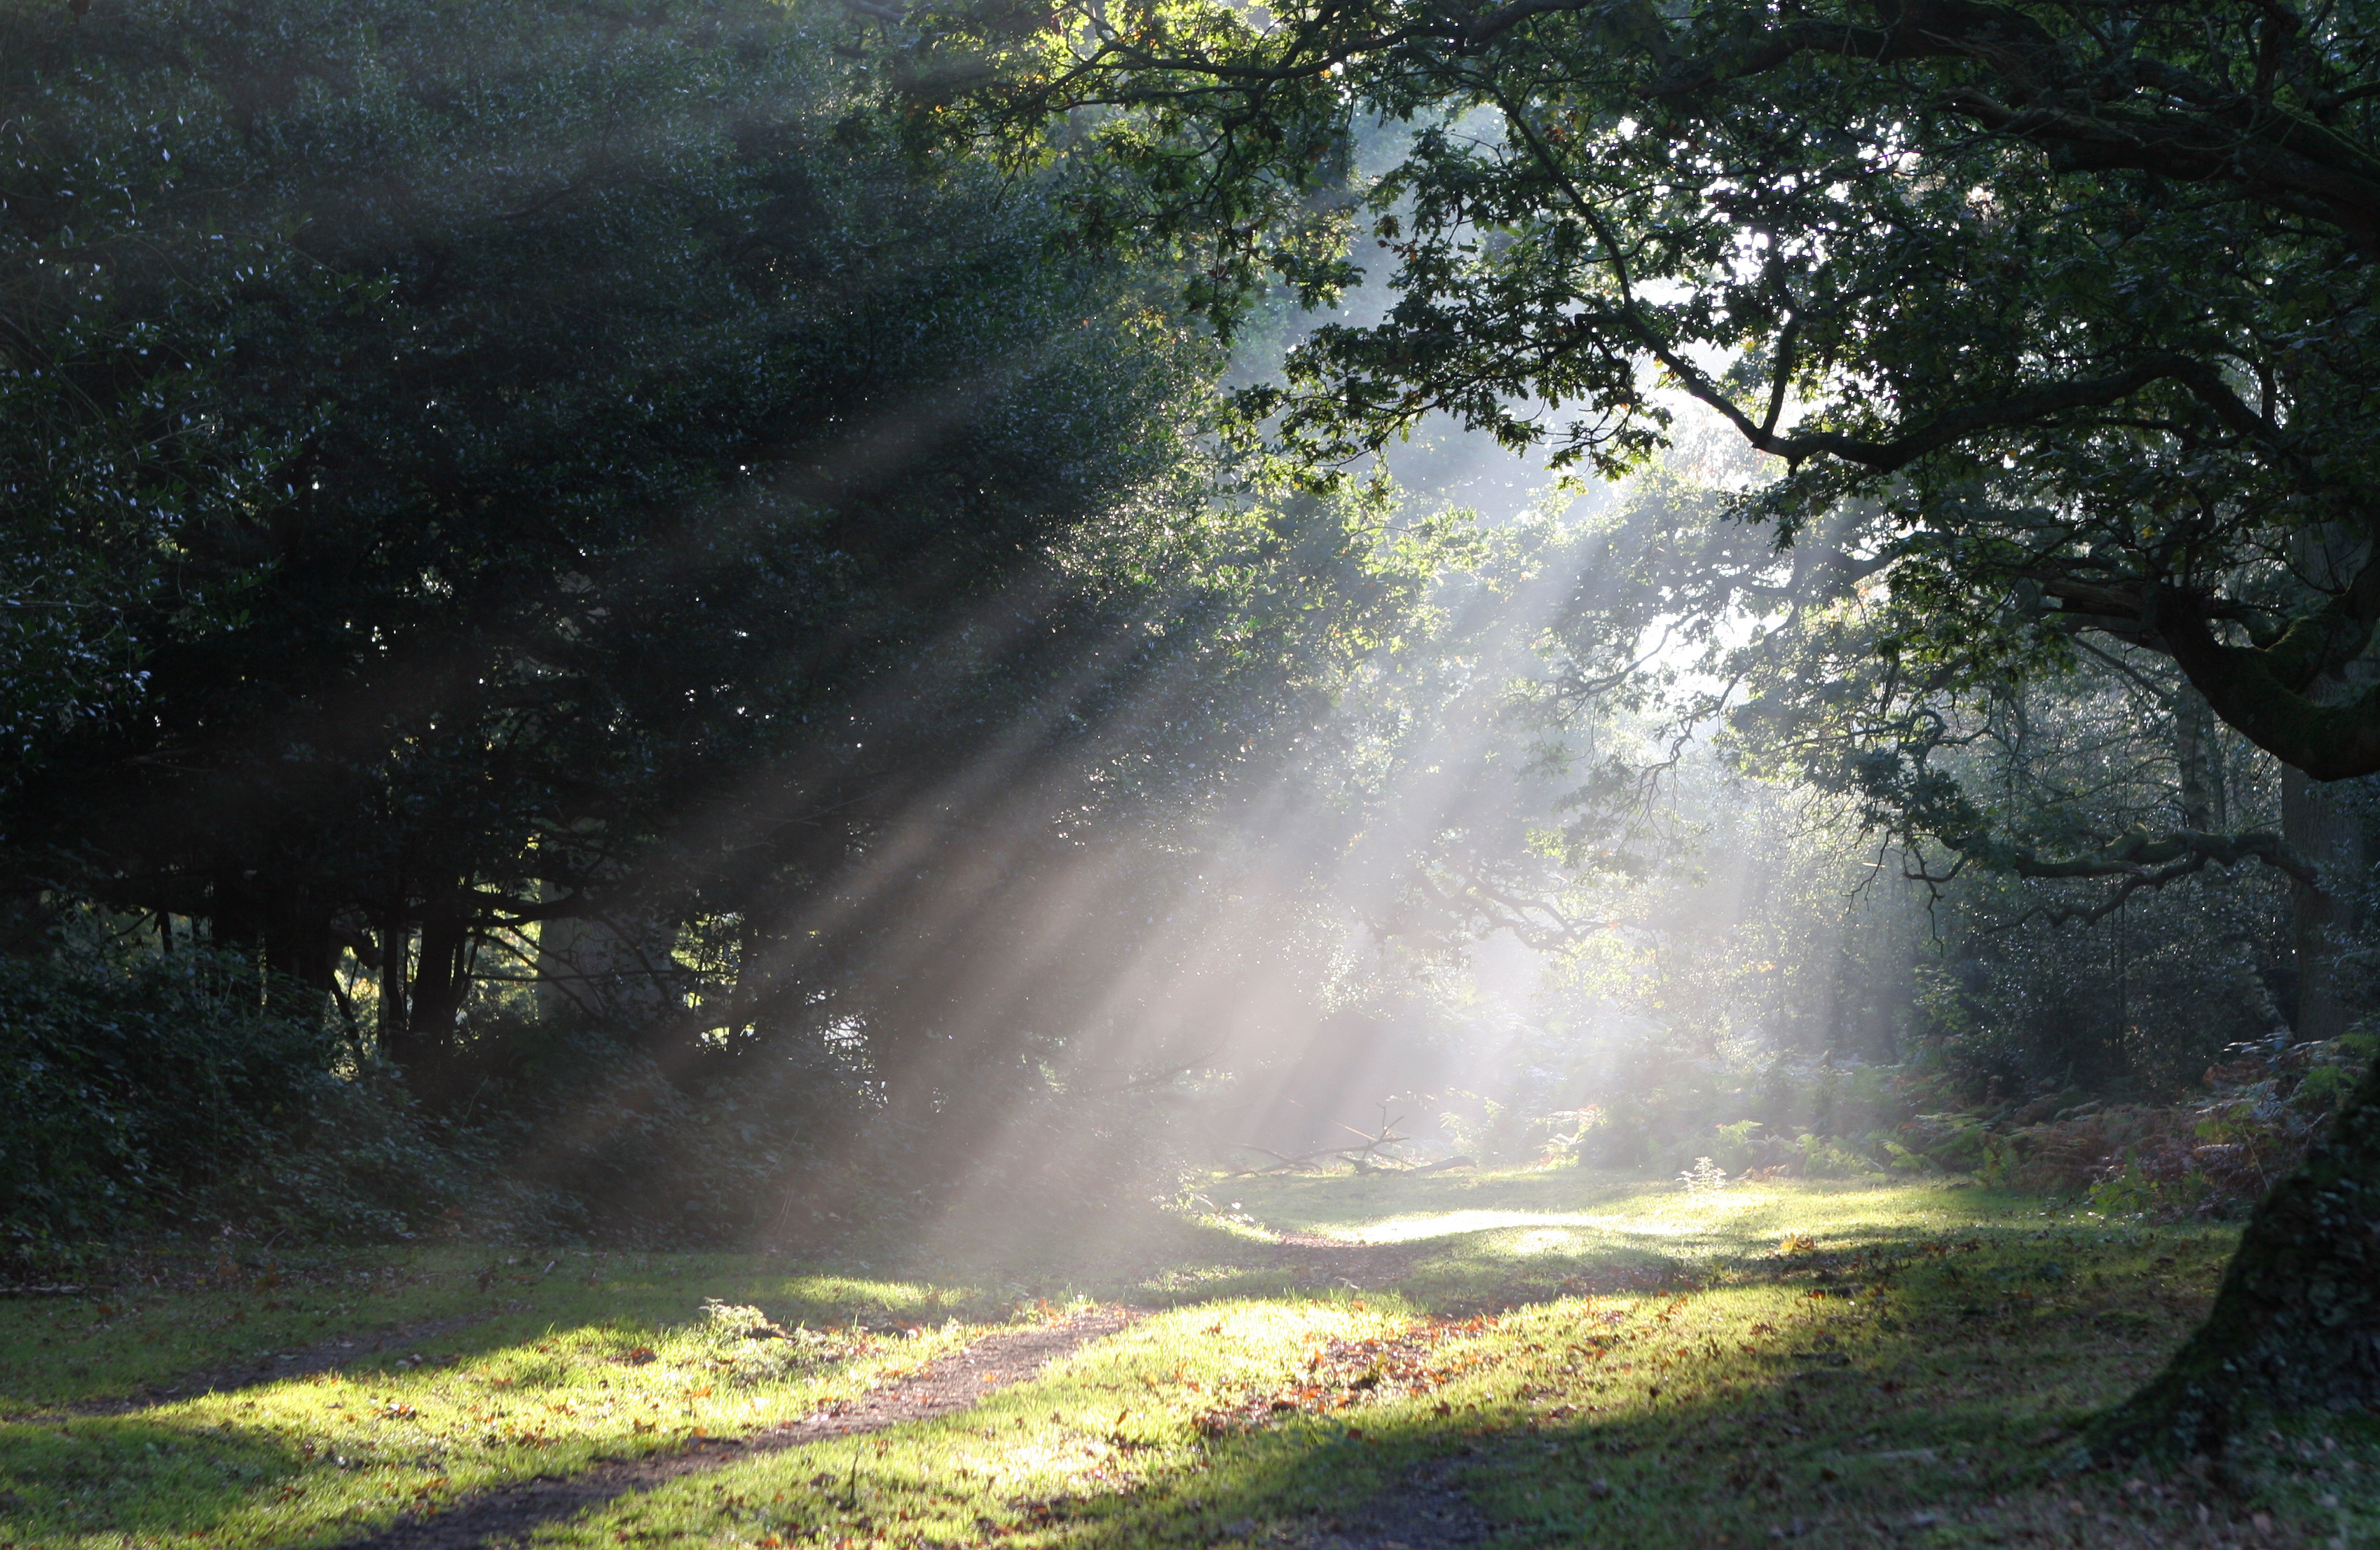 Streaks of morning sunlight illuminating a forest path